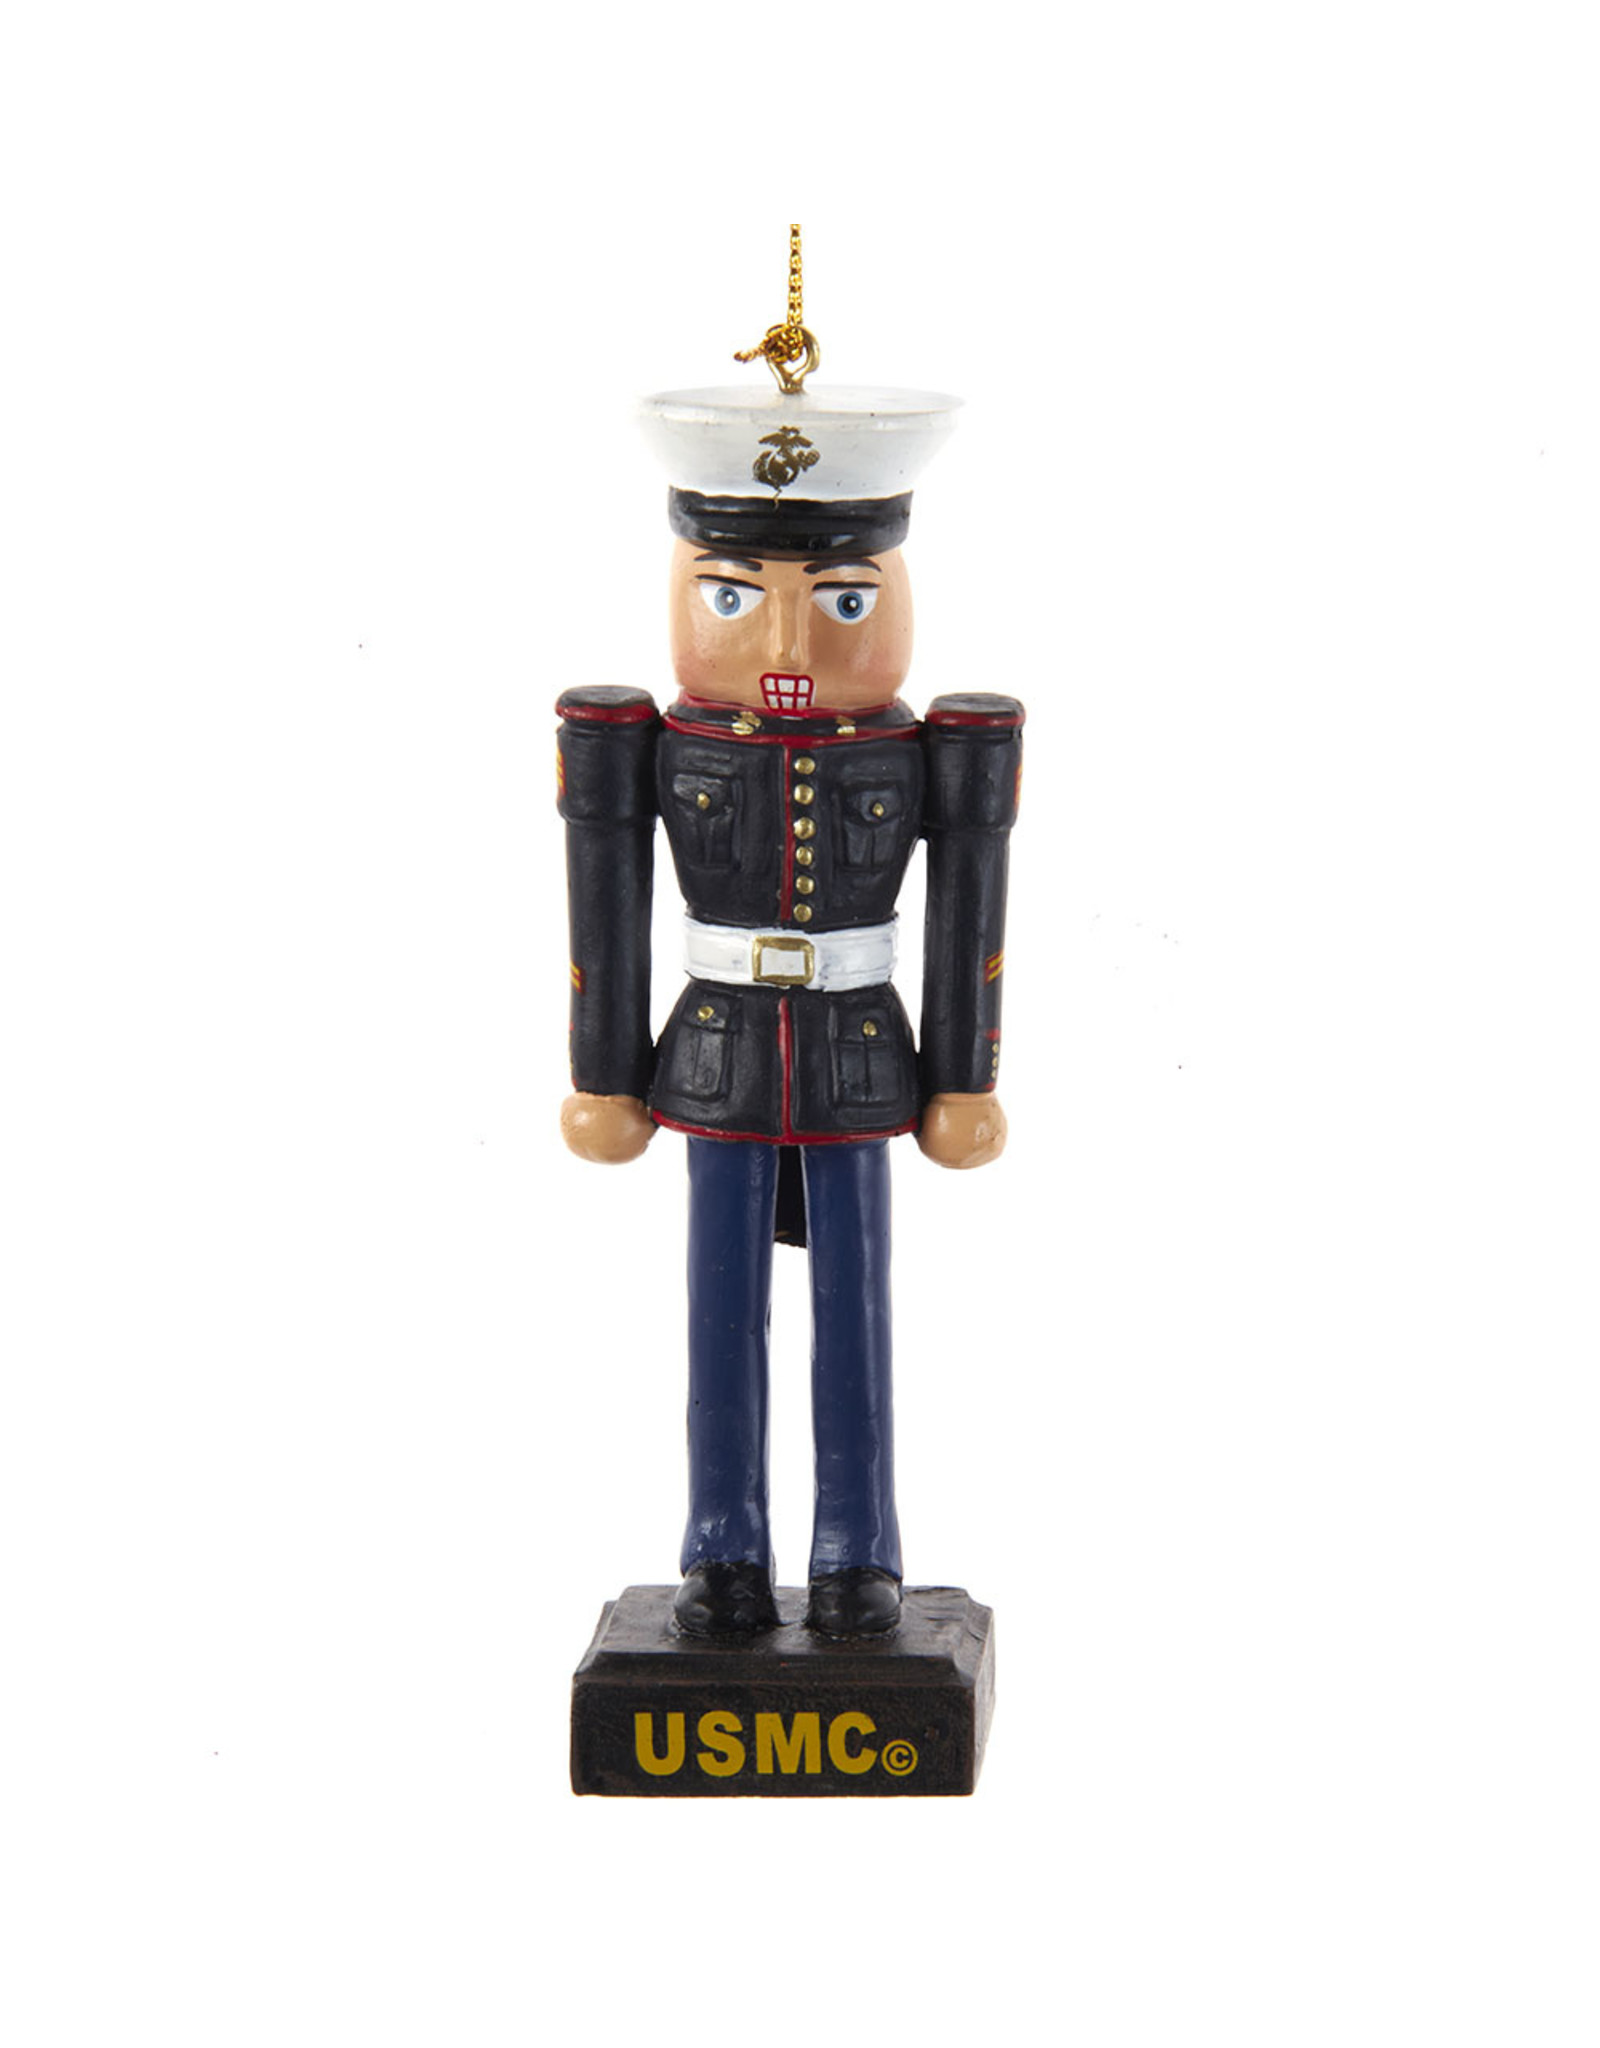 Kurt Adler U.S. Marine Corps Military Nutcracker Ornament